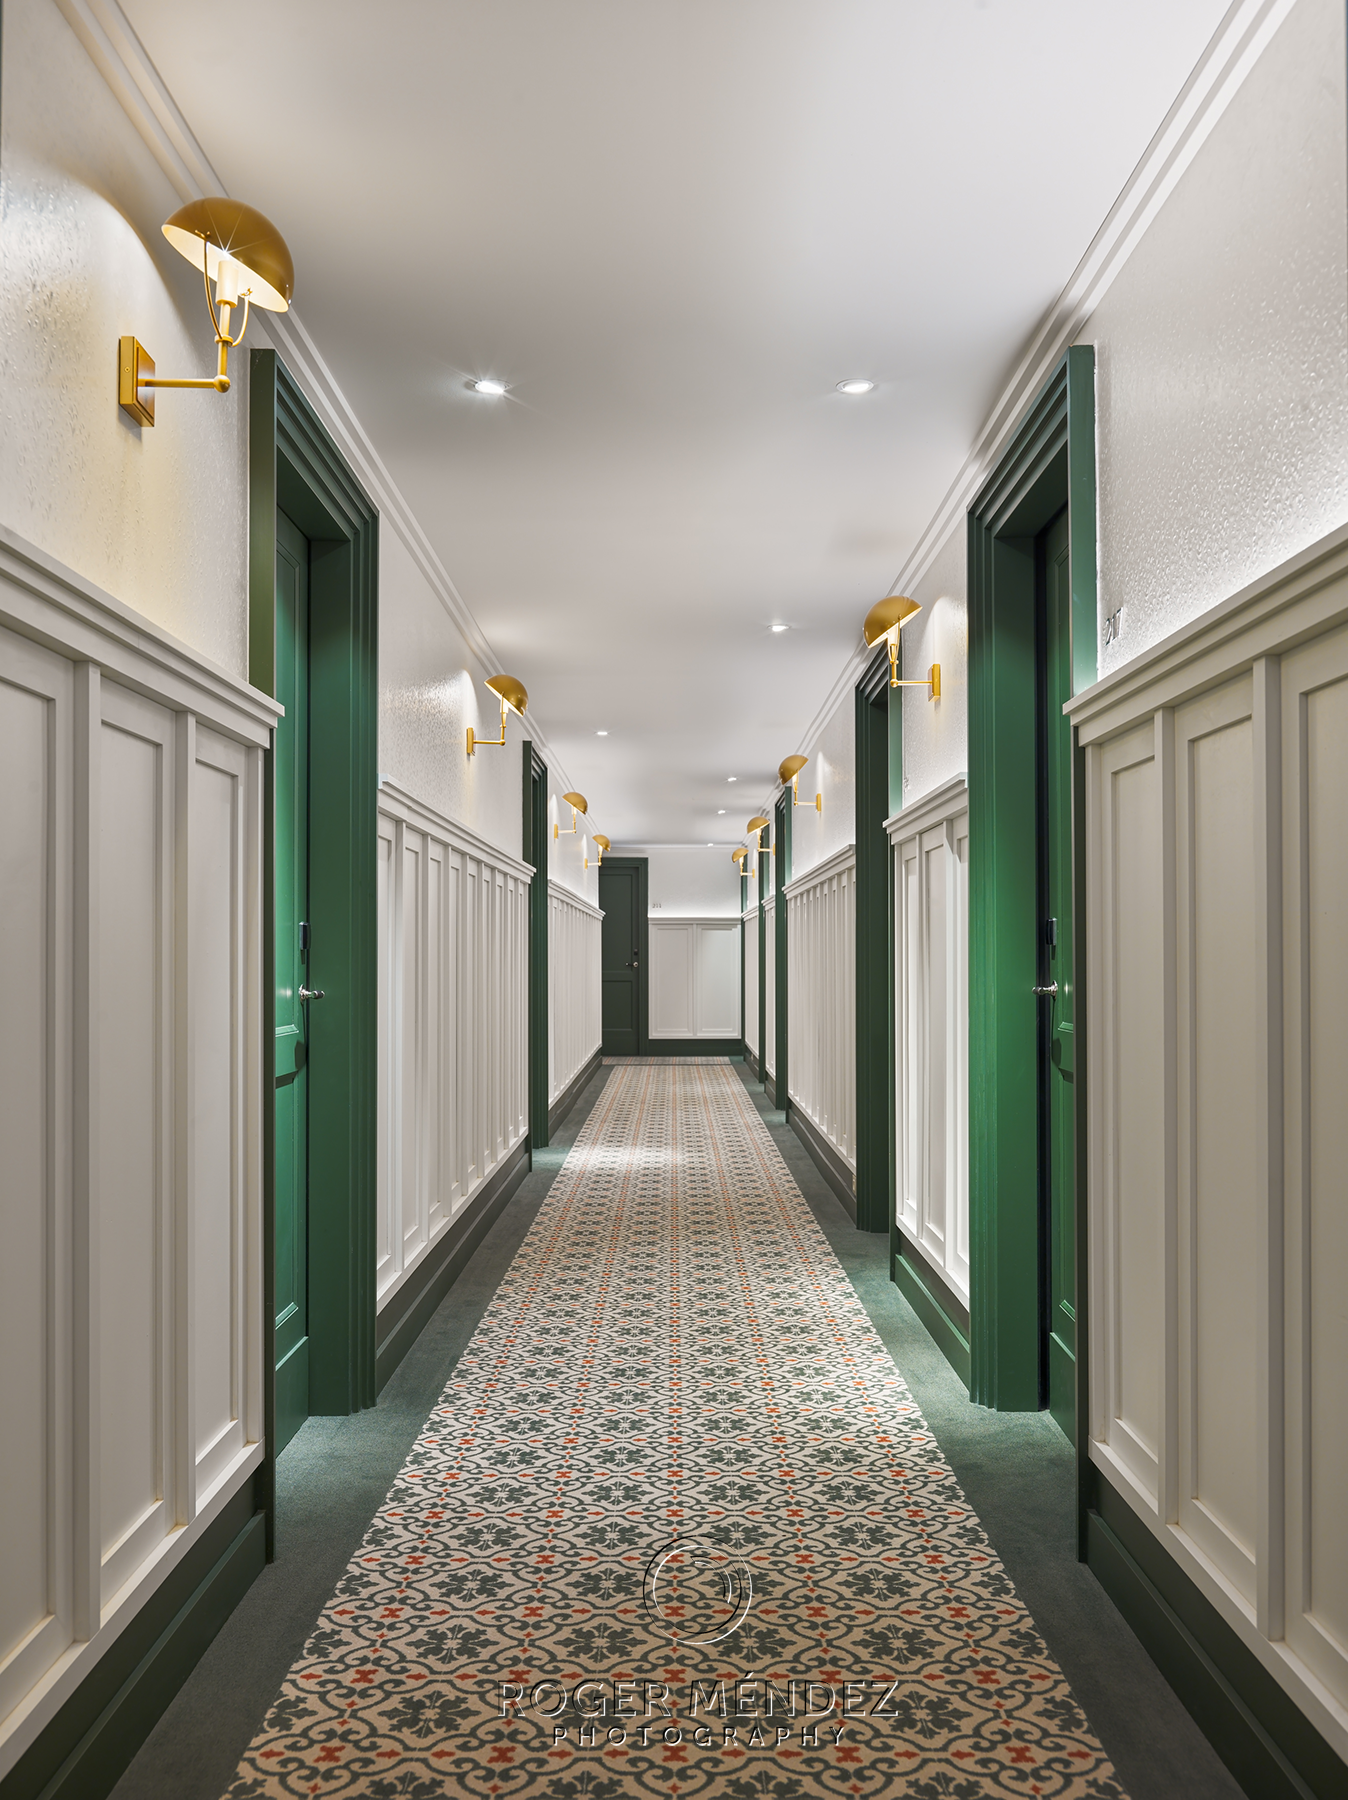 Corridors detail